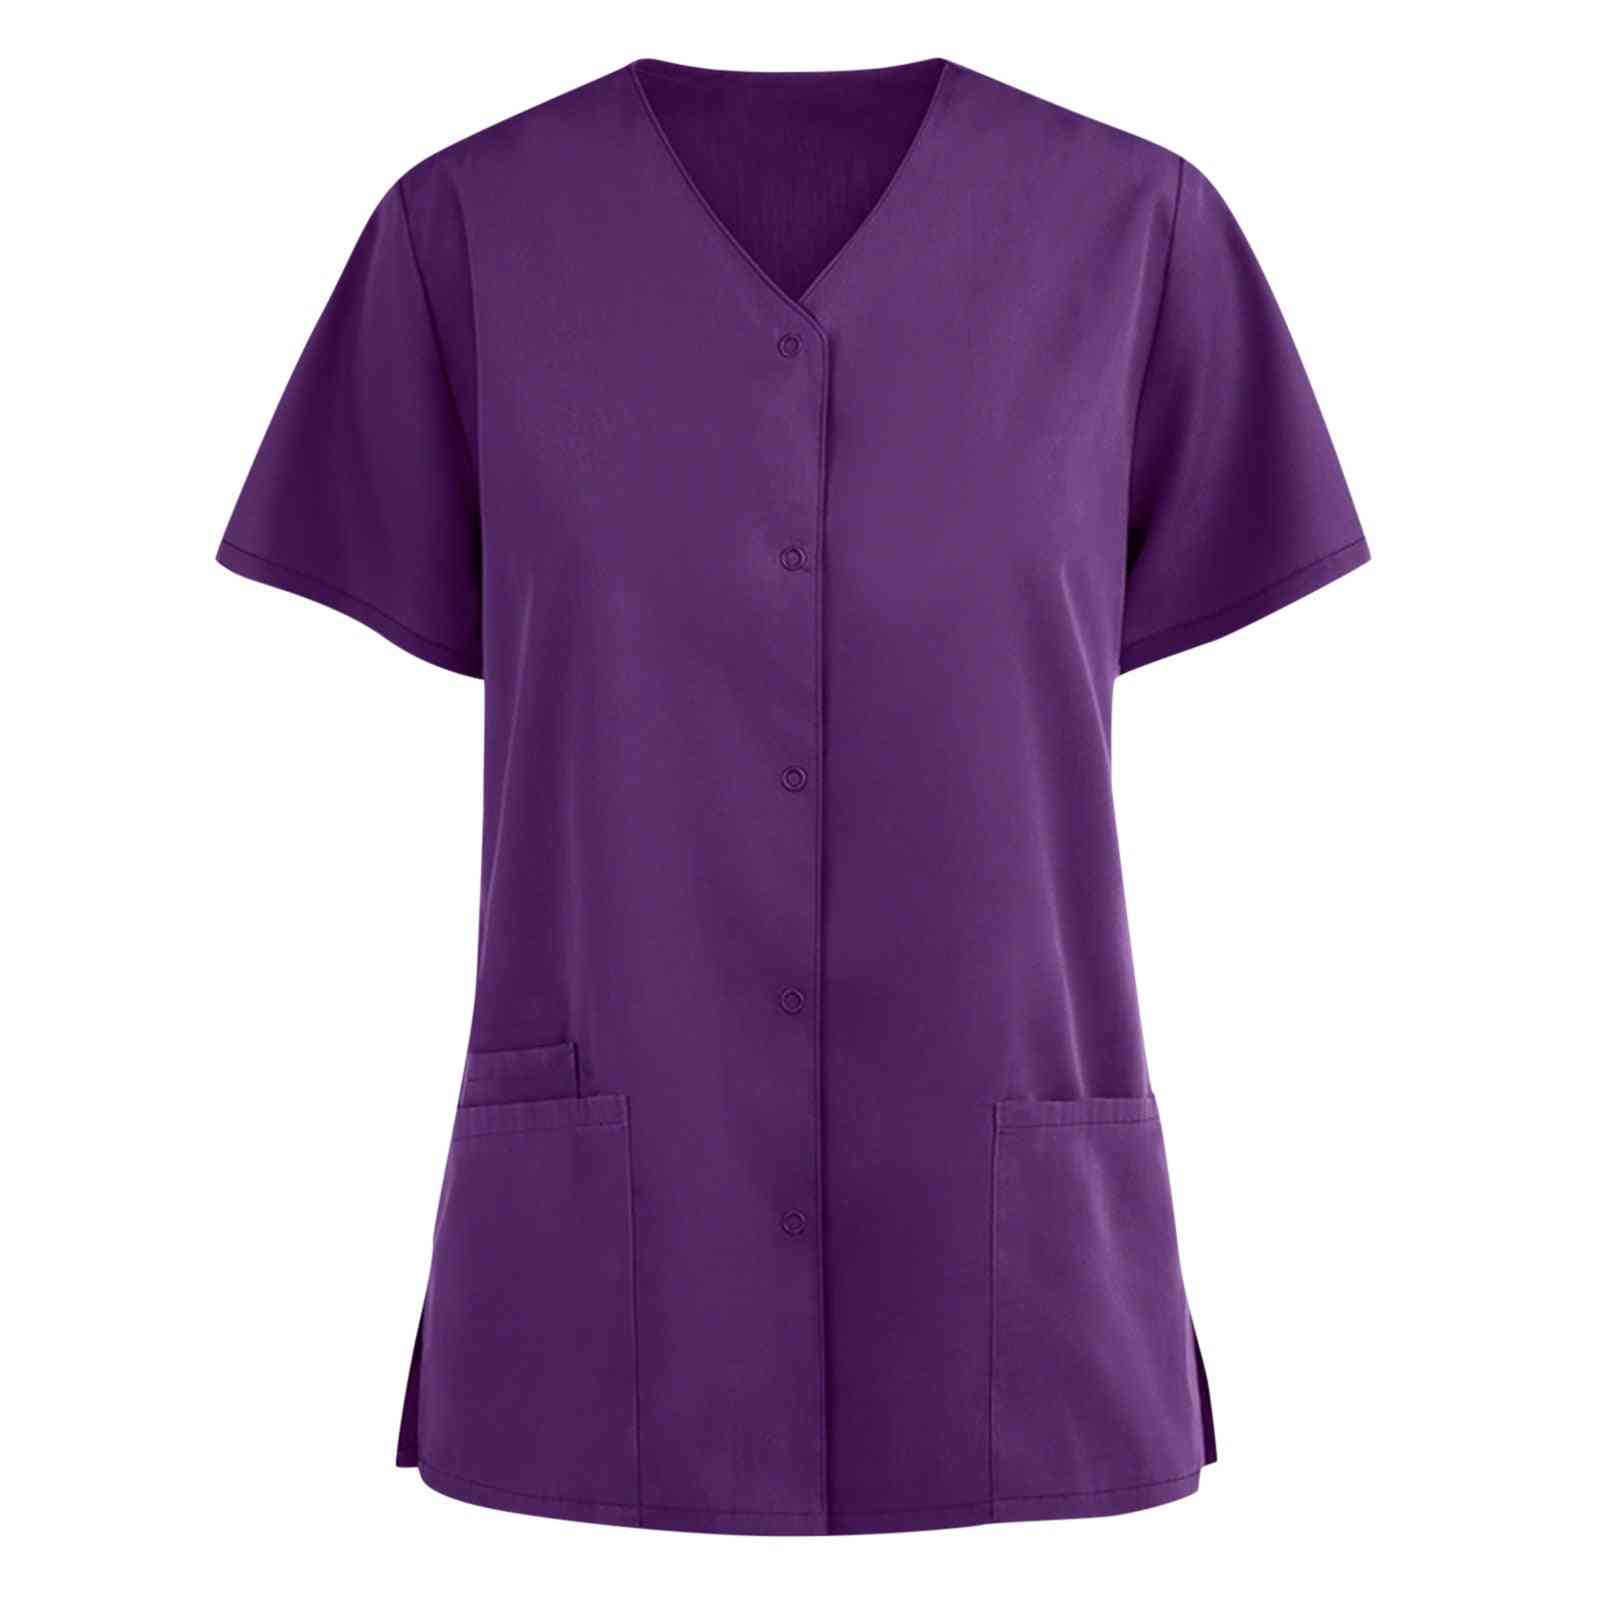 Women's Blouse Clothing Soild Short Sleeve V-neck Care Workers Shirt Top